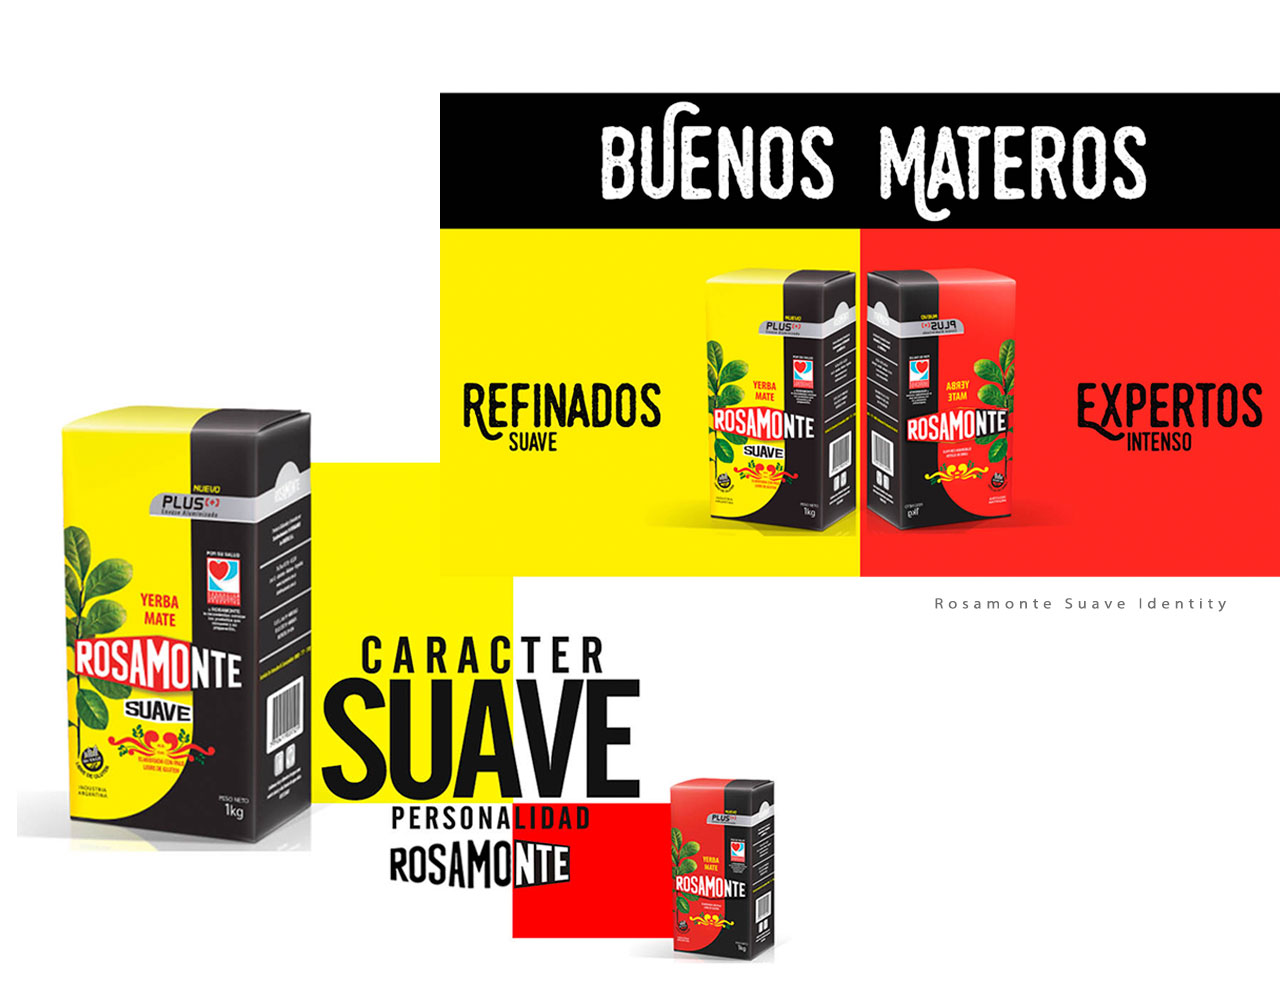 Rosamonte Suave brand/marketing